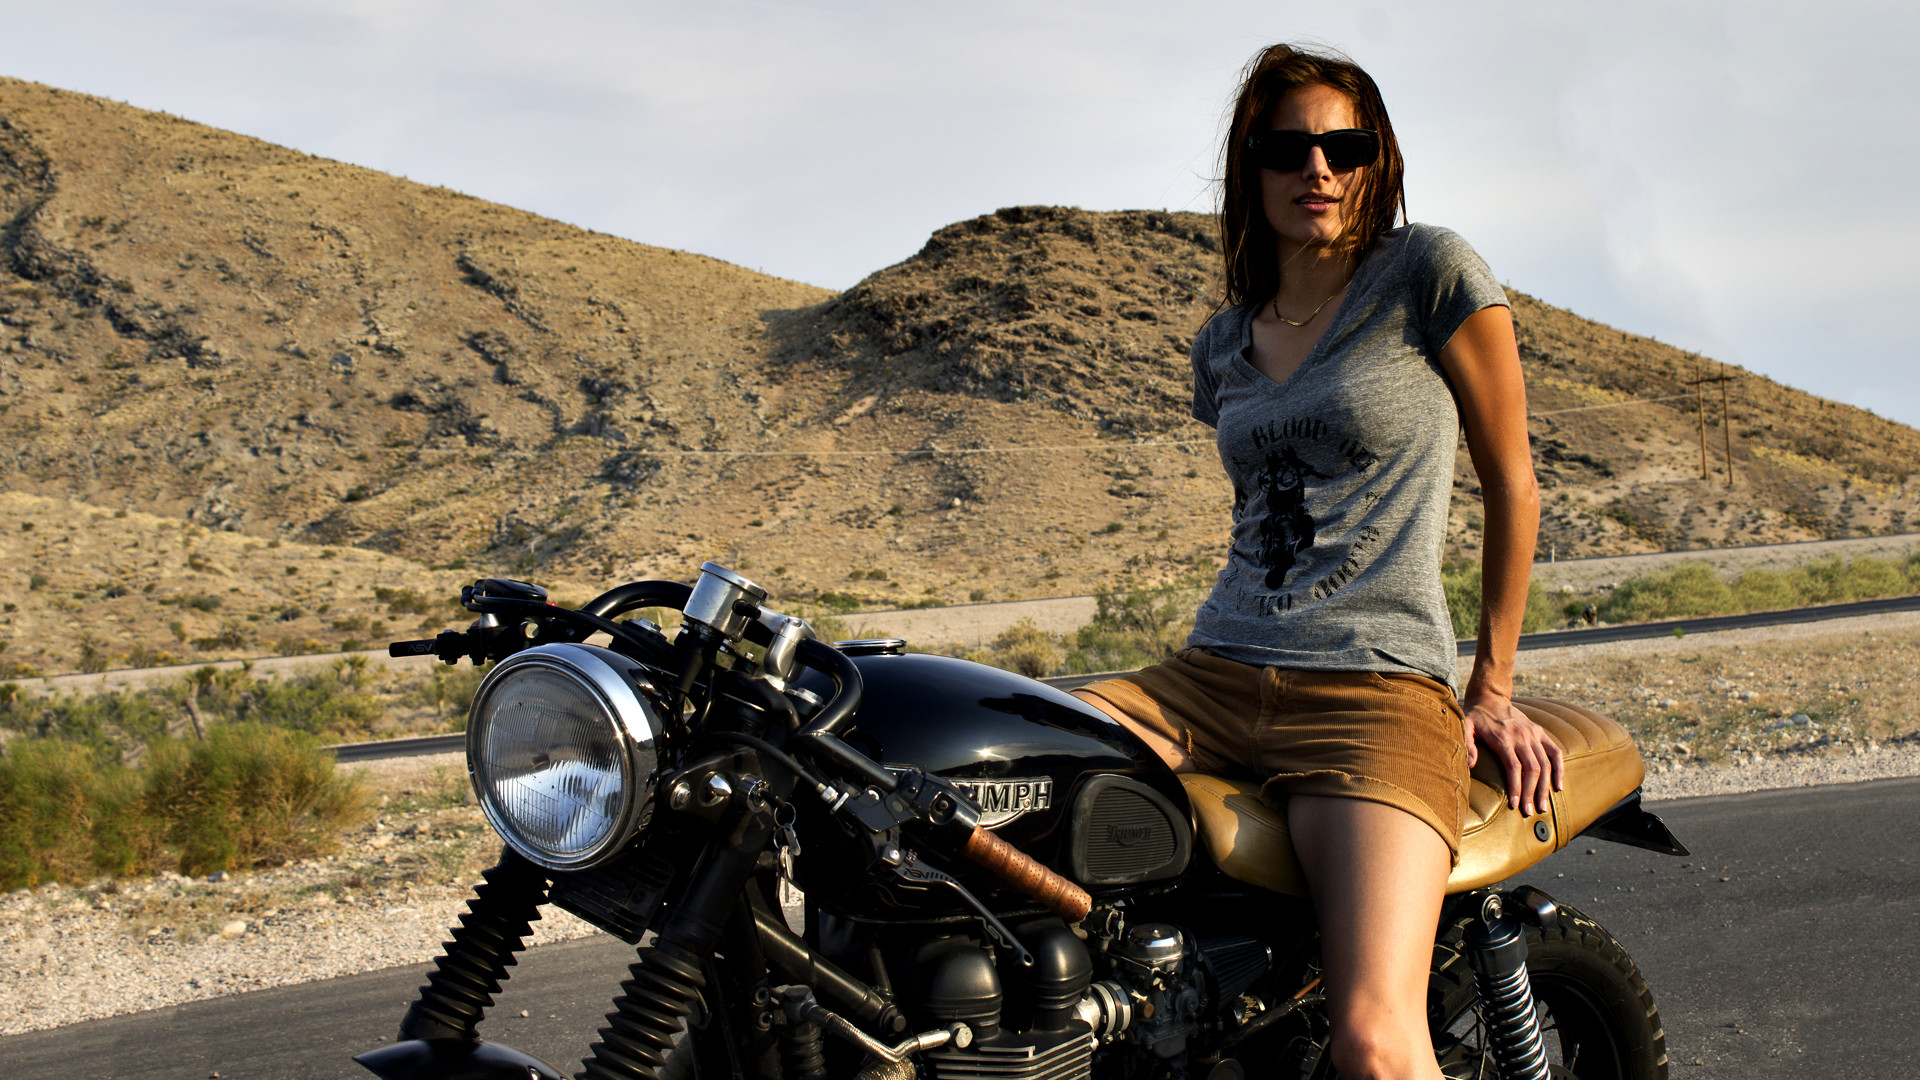 motorcycle girl wallpaper,land vehicle,motorcycle,motorcycling,vehicle,cruiser